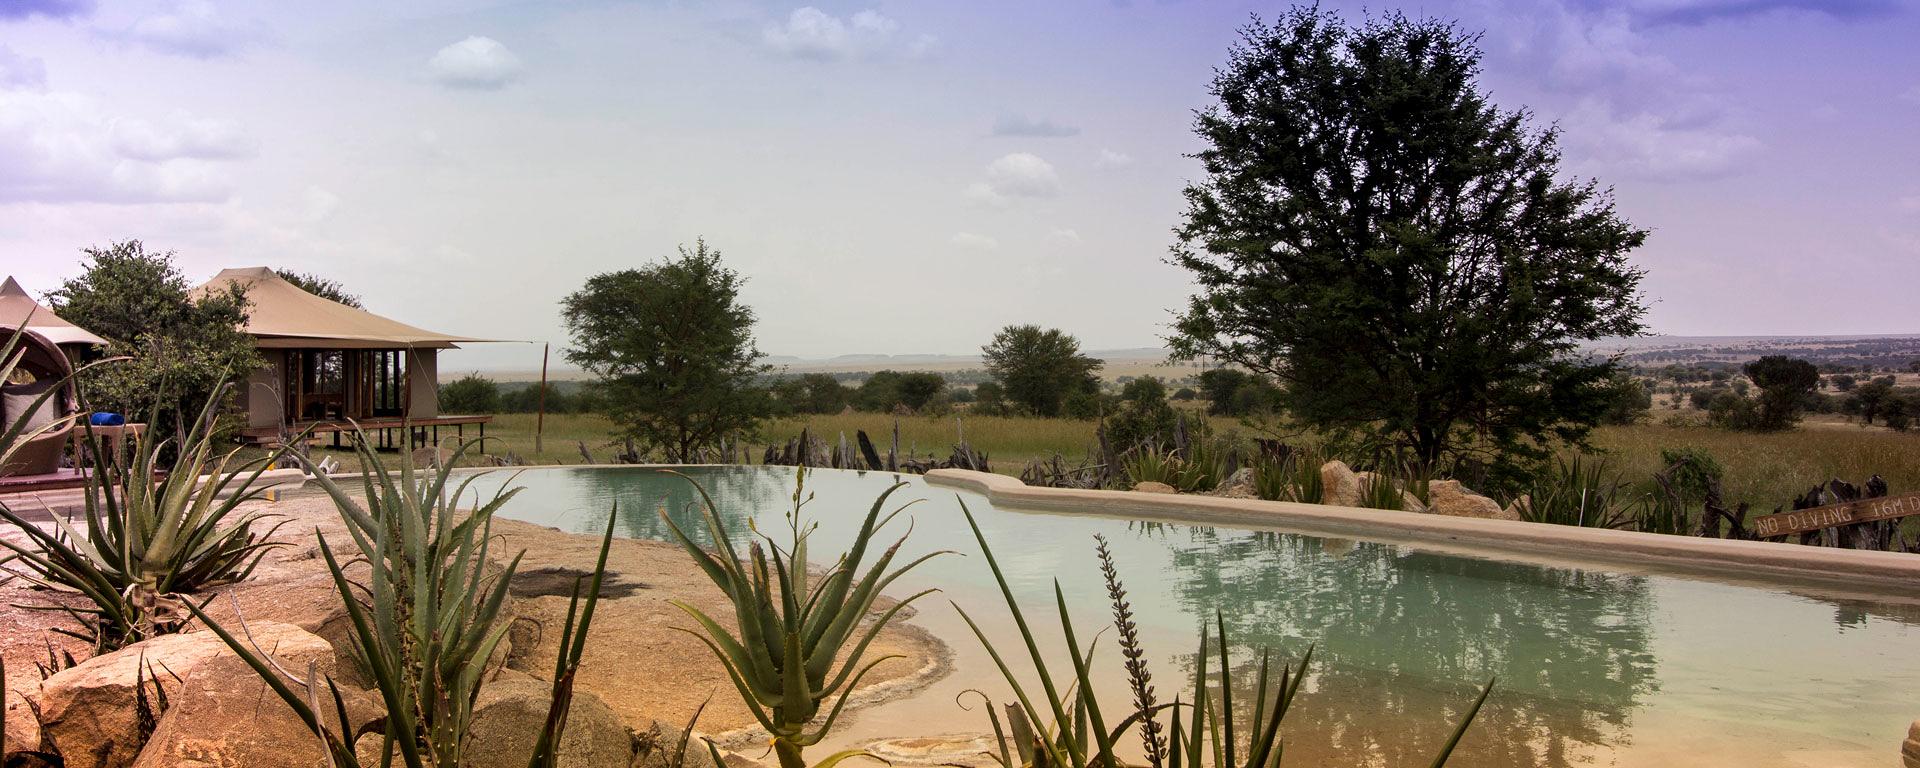 Asilia Sayari camp _ pool area_Masai mara _Kenya Destination